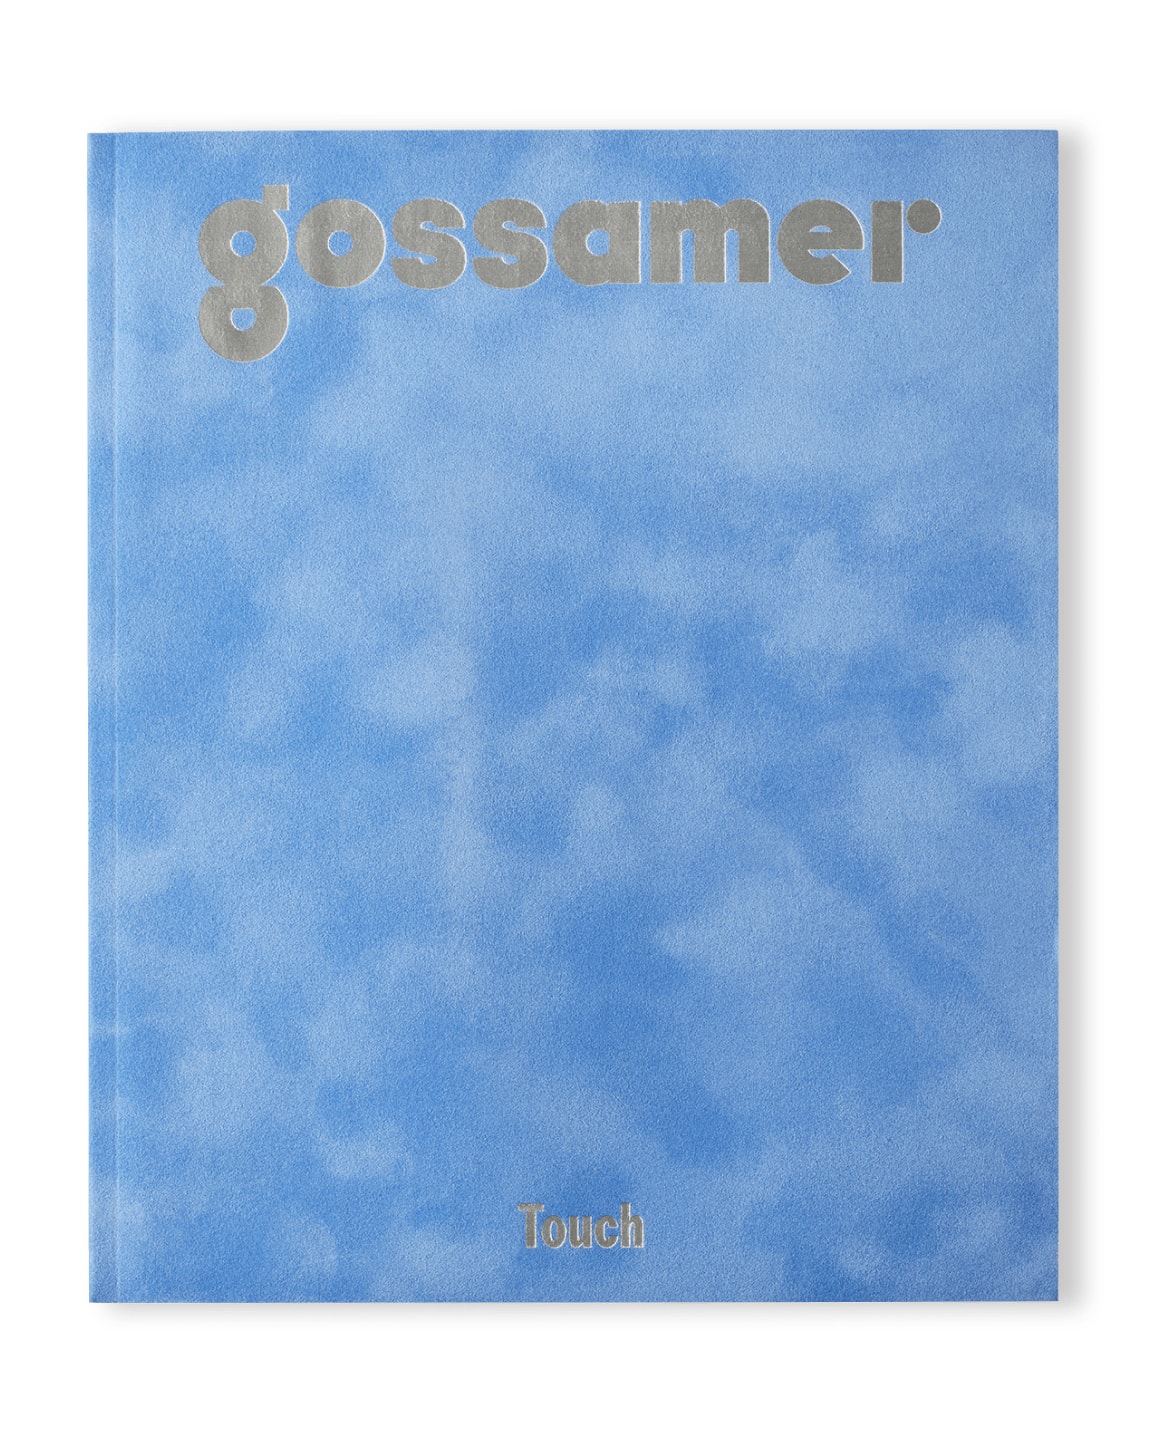 gossamer 7—Touch